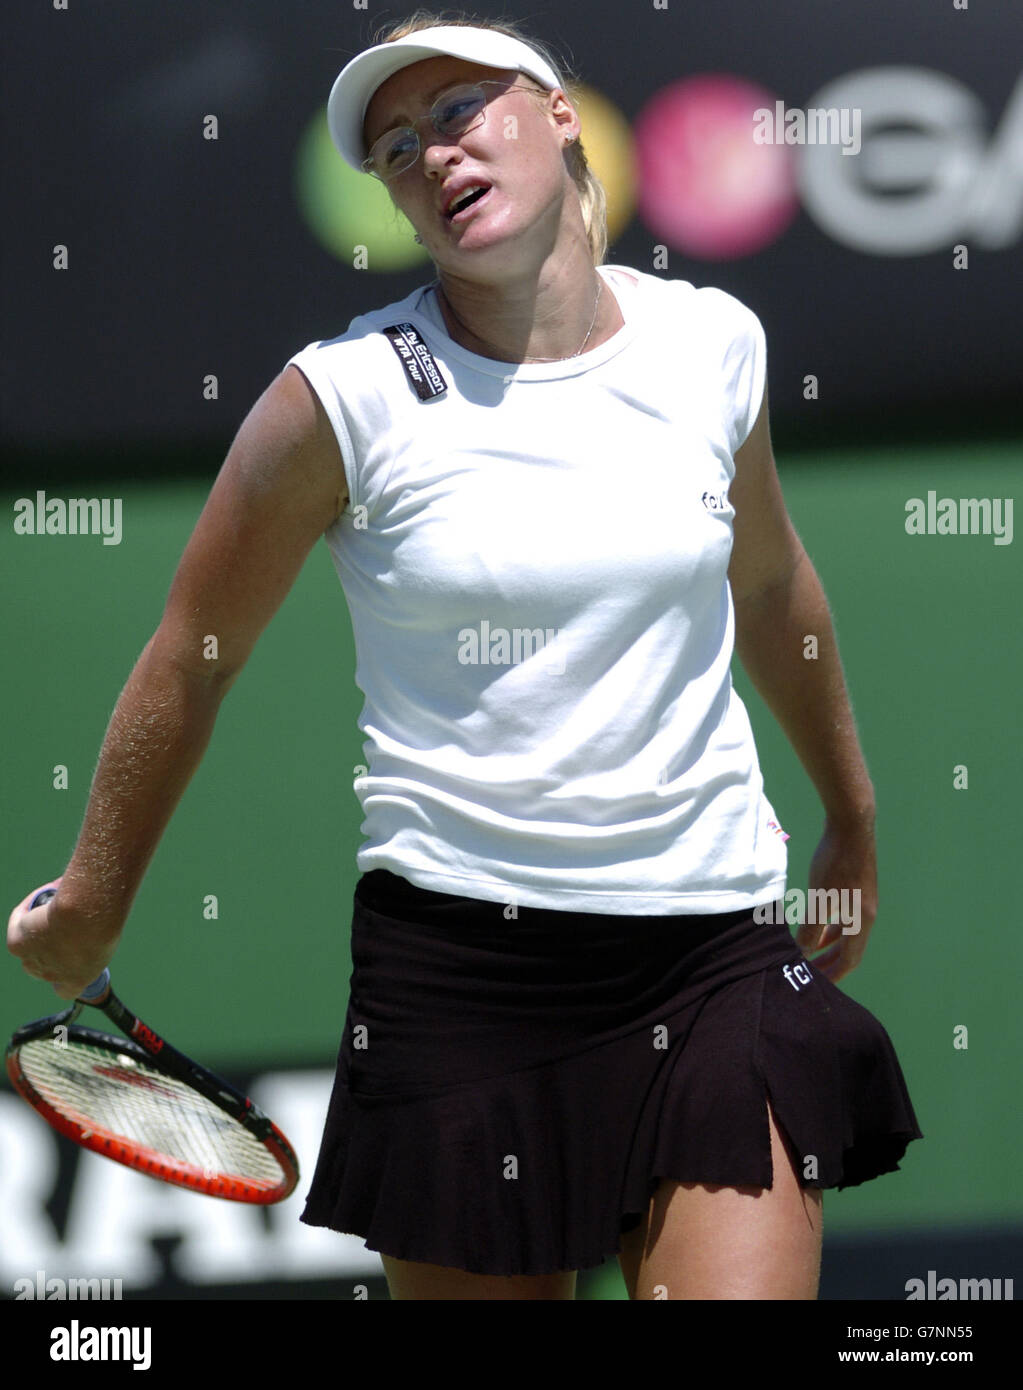 Tennis - Australian Open - donne del terzo round Foto Stock